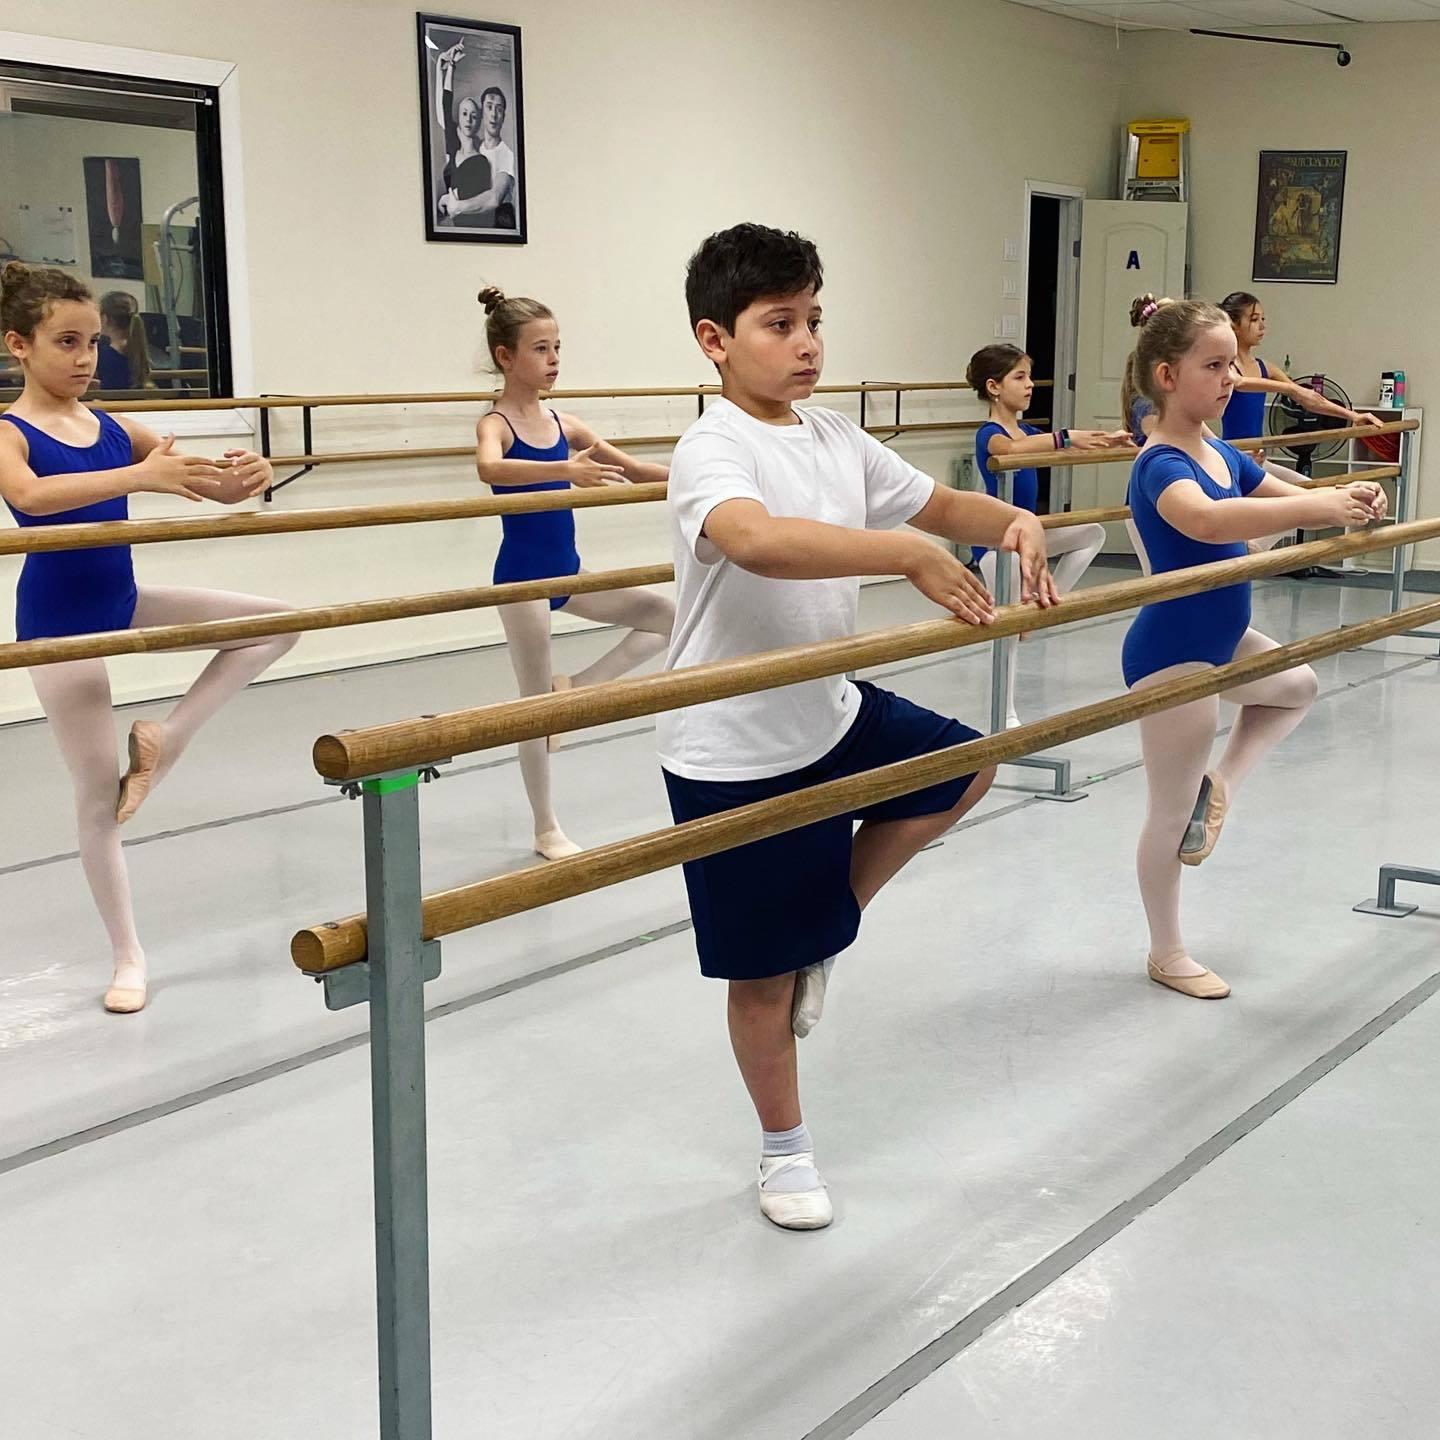 Slavin-Nadal School Of Ballet Photo